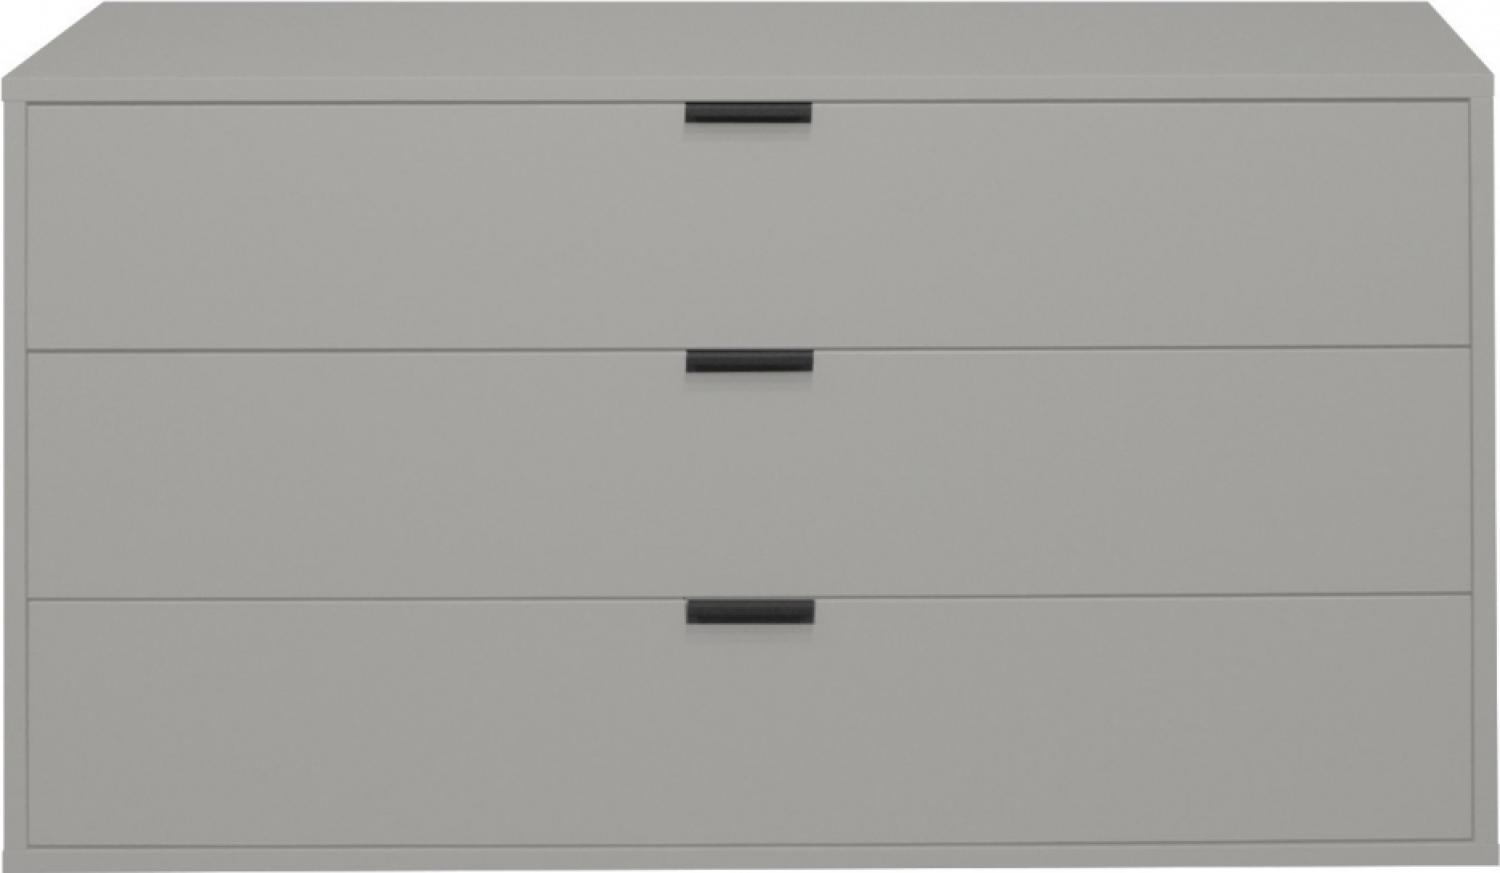 Kommode Schubladenkommode Sideboard ca. 119 x 67 x 45 cm Möbelgleiter Kreidegrau matt Lack Bild 1